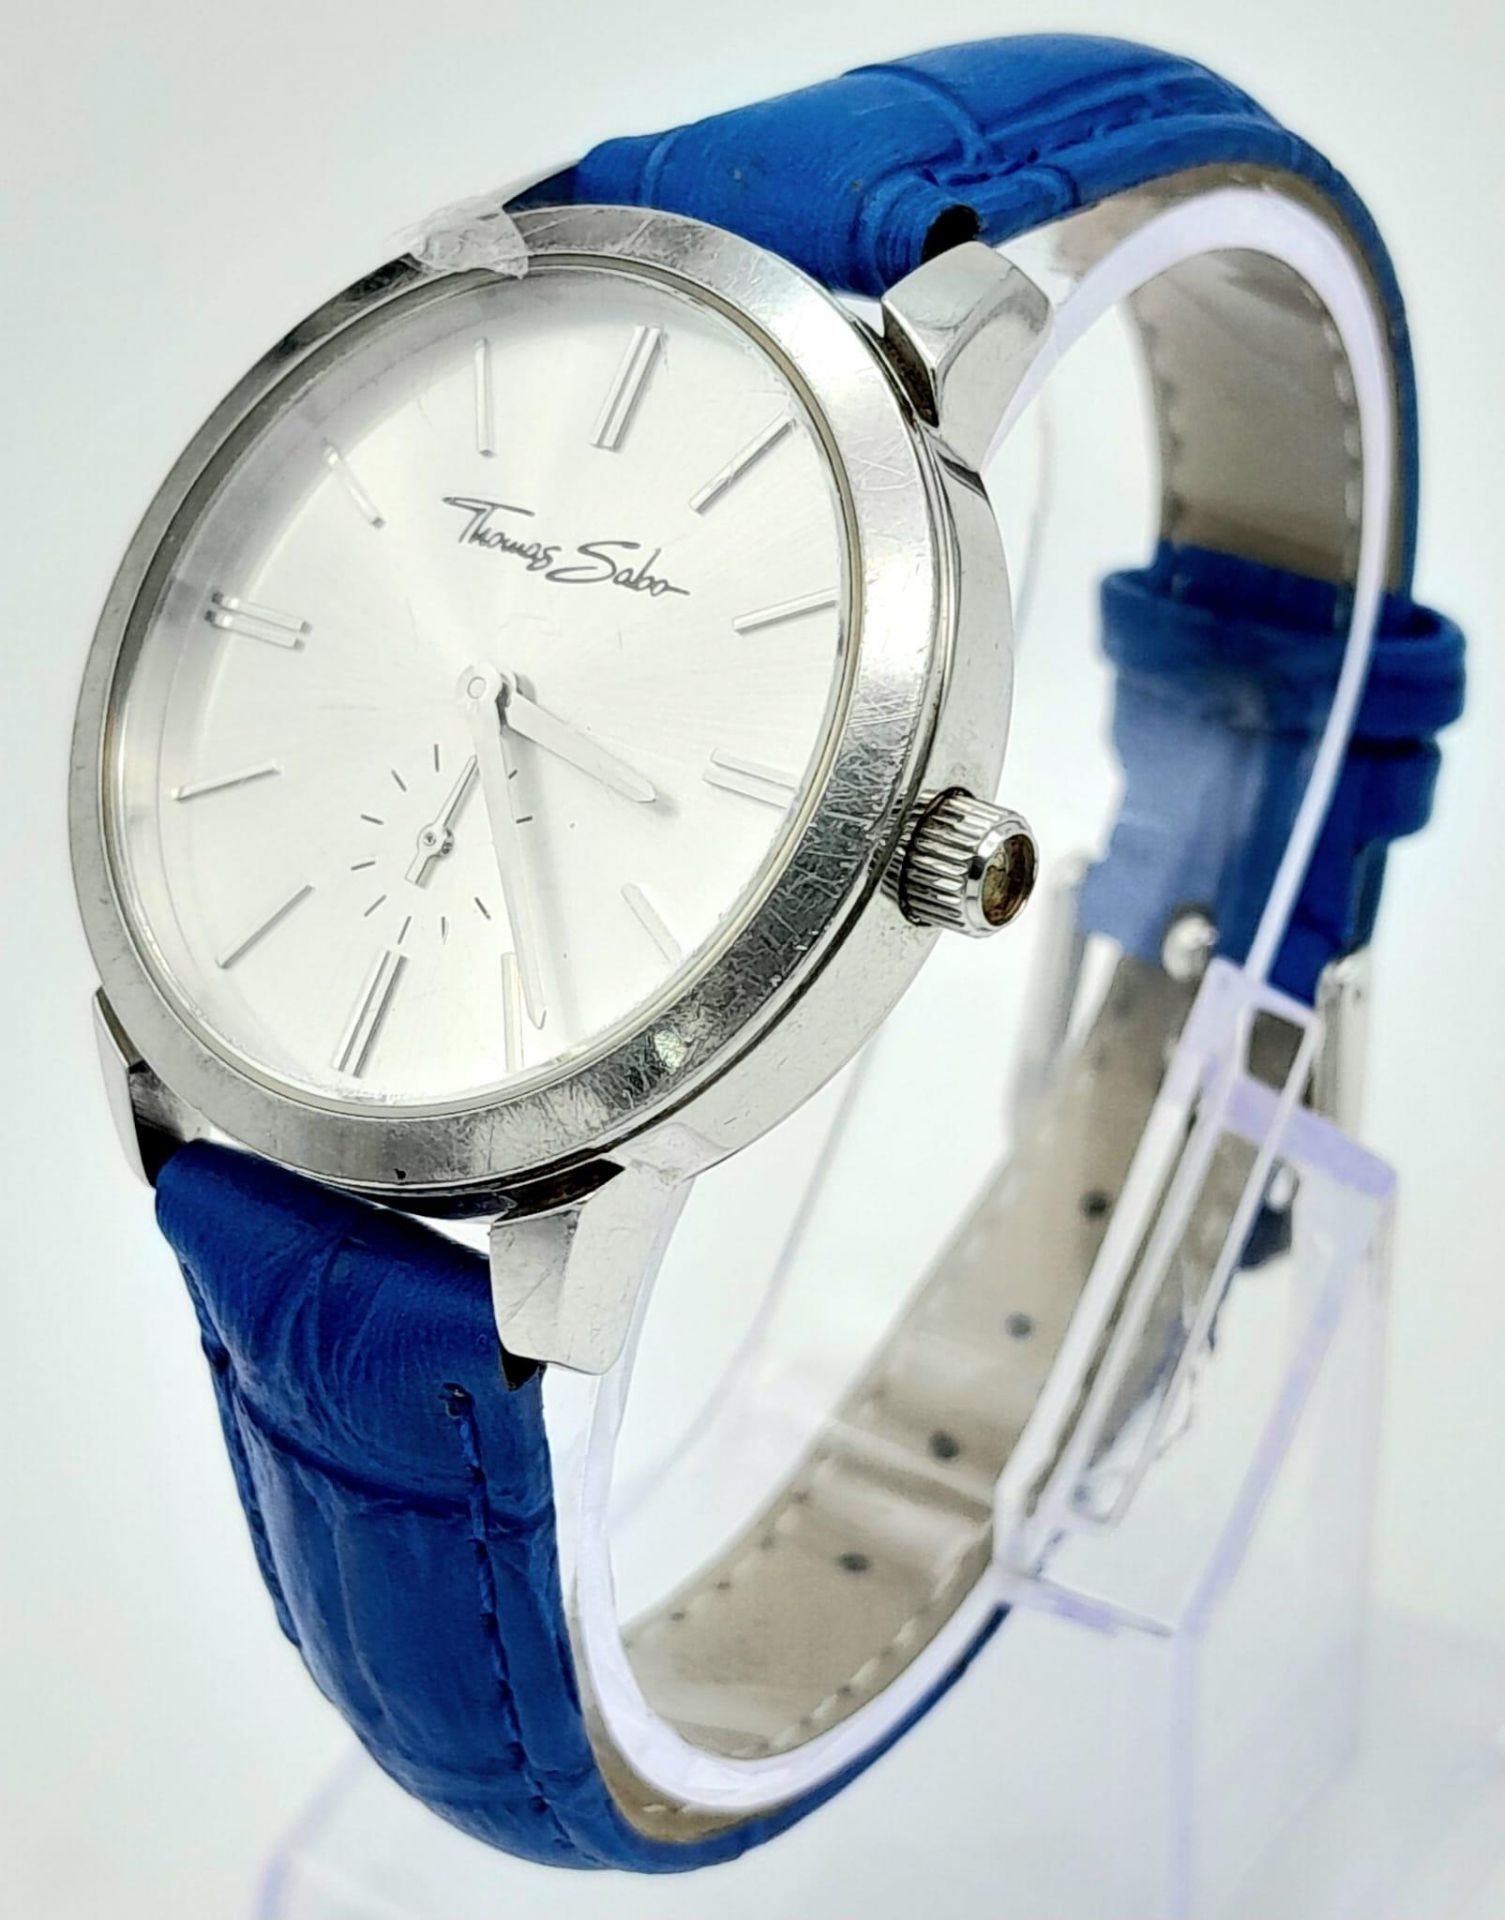 Thomas Sabo Designer Quartz Watch Model WA0248. 35mm Case. Full Working Order. Replacement Battery - Image 2 of 7